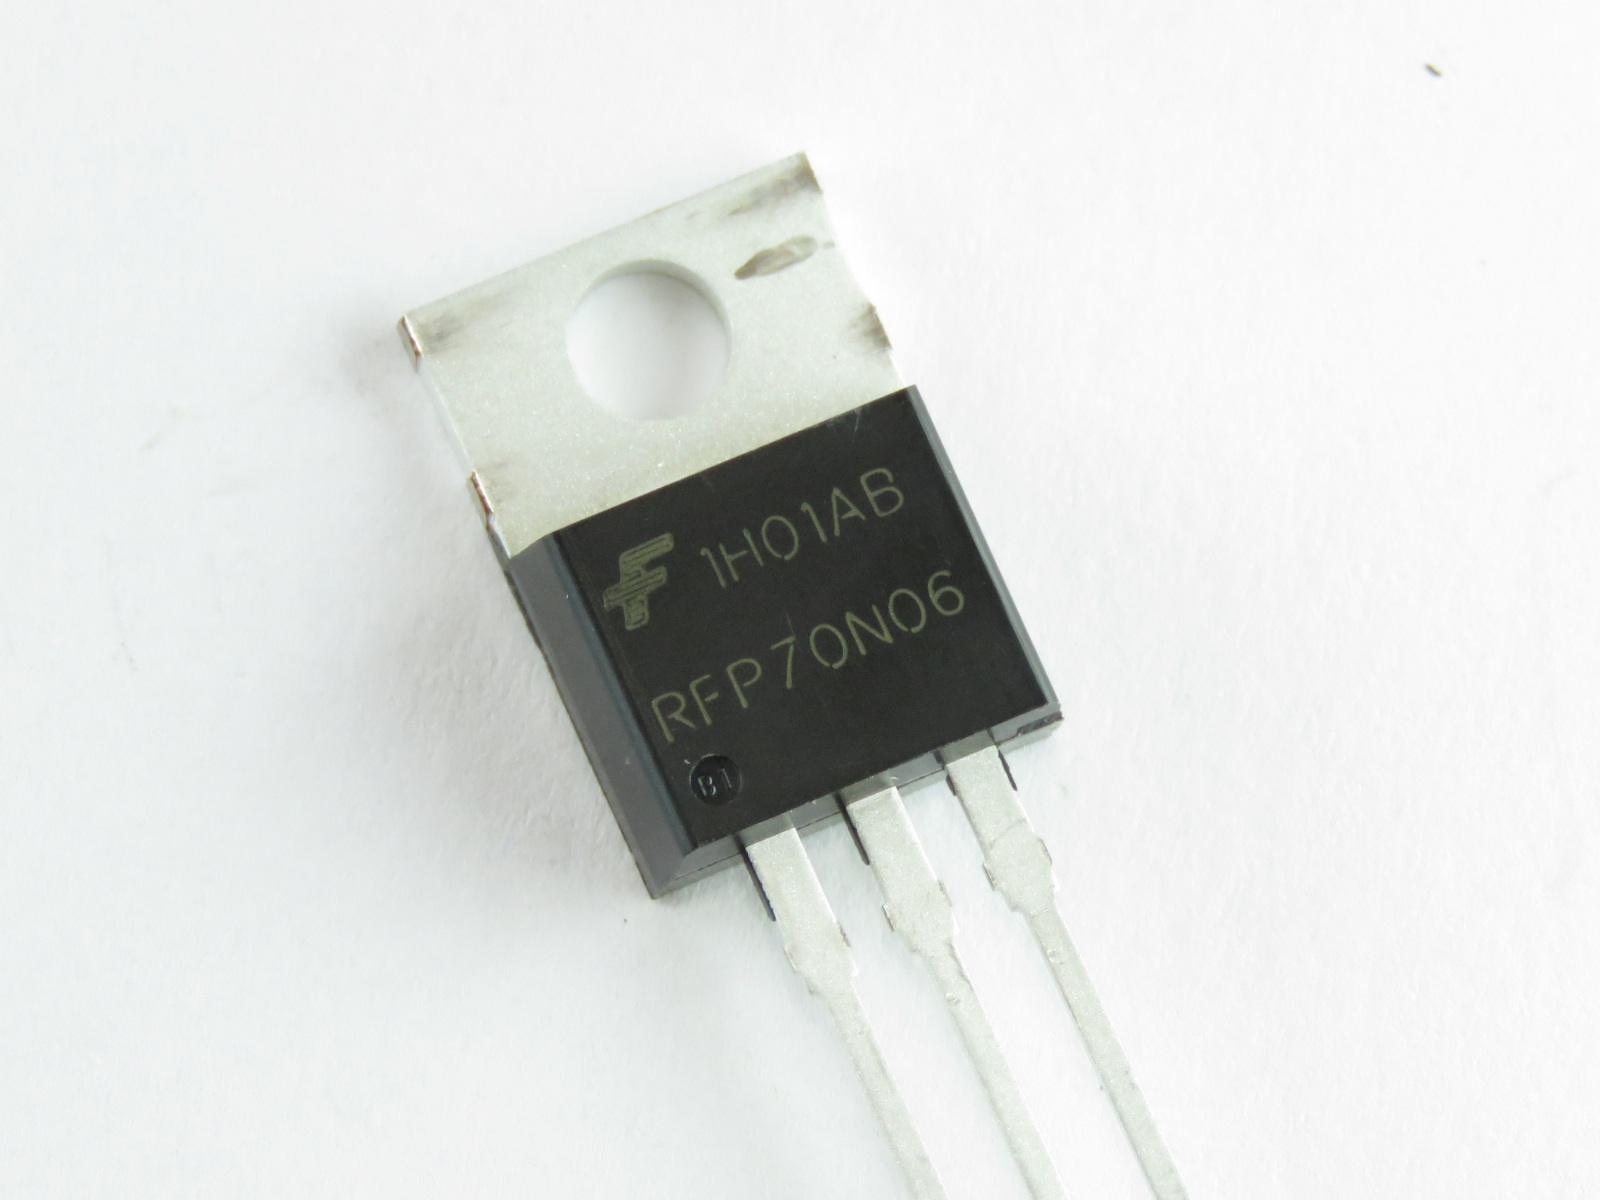 Transistor RFP70N06